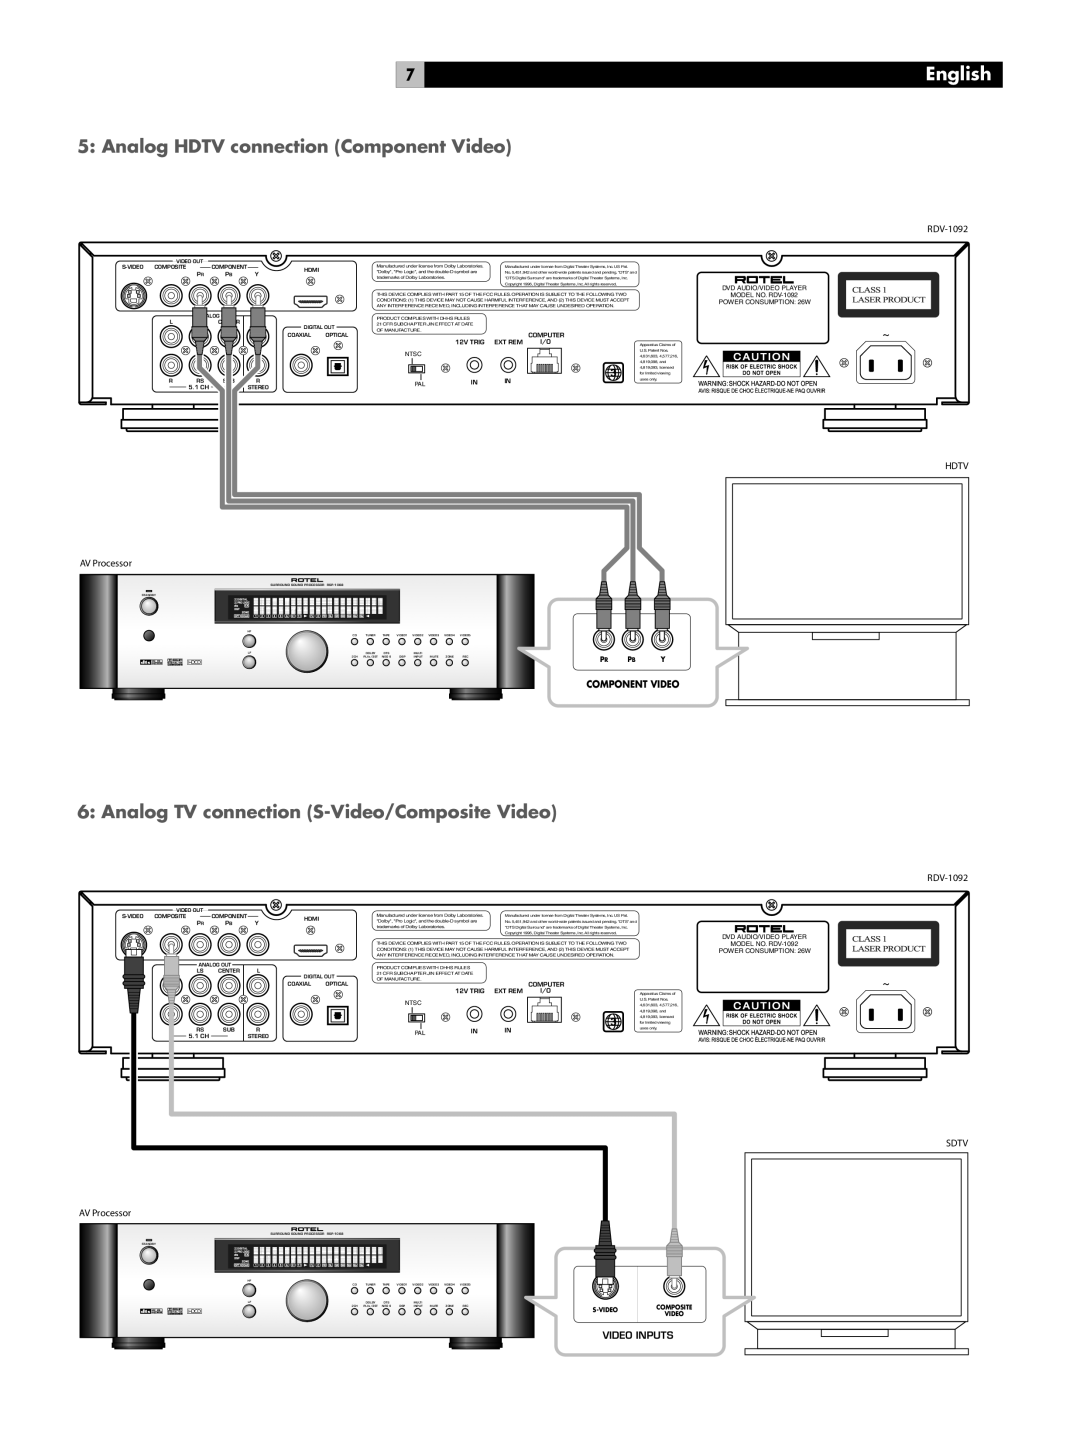 Rotel RDV-1092 owner manual Analog HDTV connection Component Video, Analog TV connection S-Video/Composite Video, English 